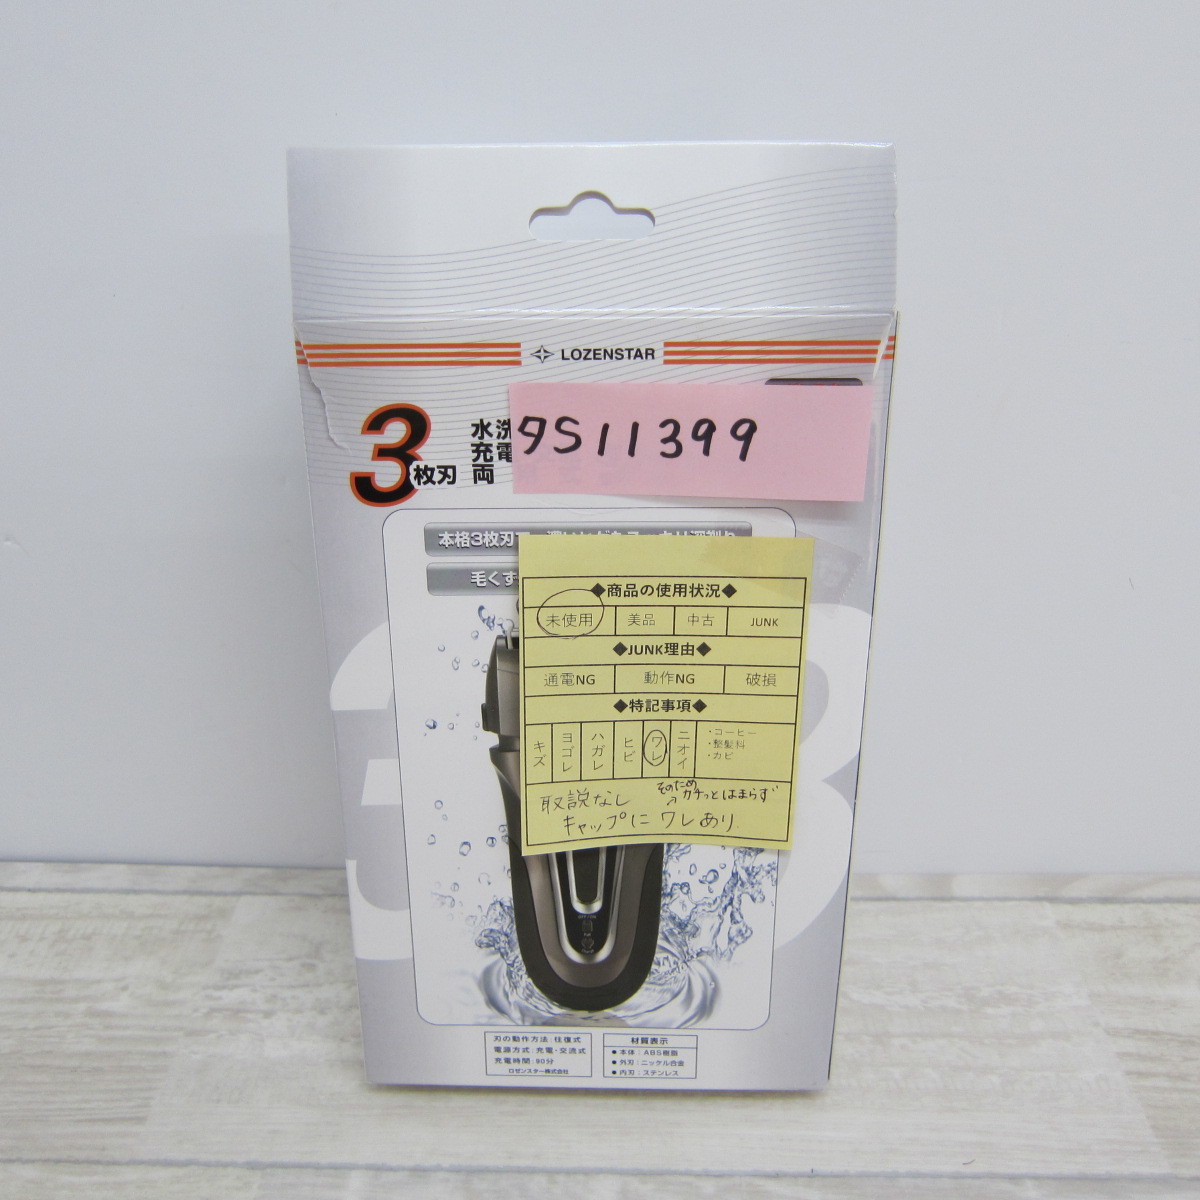 S11399【未使用】ロゼンスター 電気シェーバー 3枚刃 ダブルエッジトリマー搭載 メンズシェーバー ヒゲ剃り 携帯用ポーチ付 SR-185